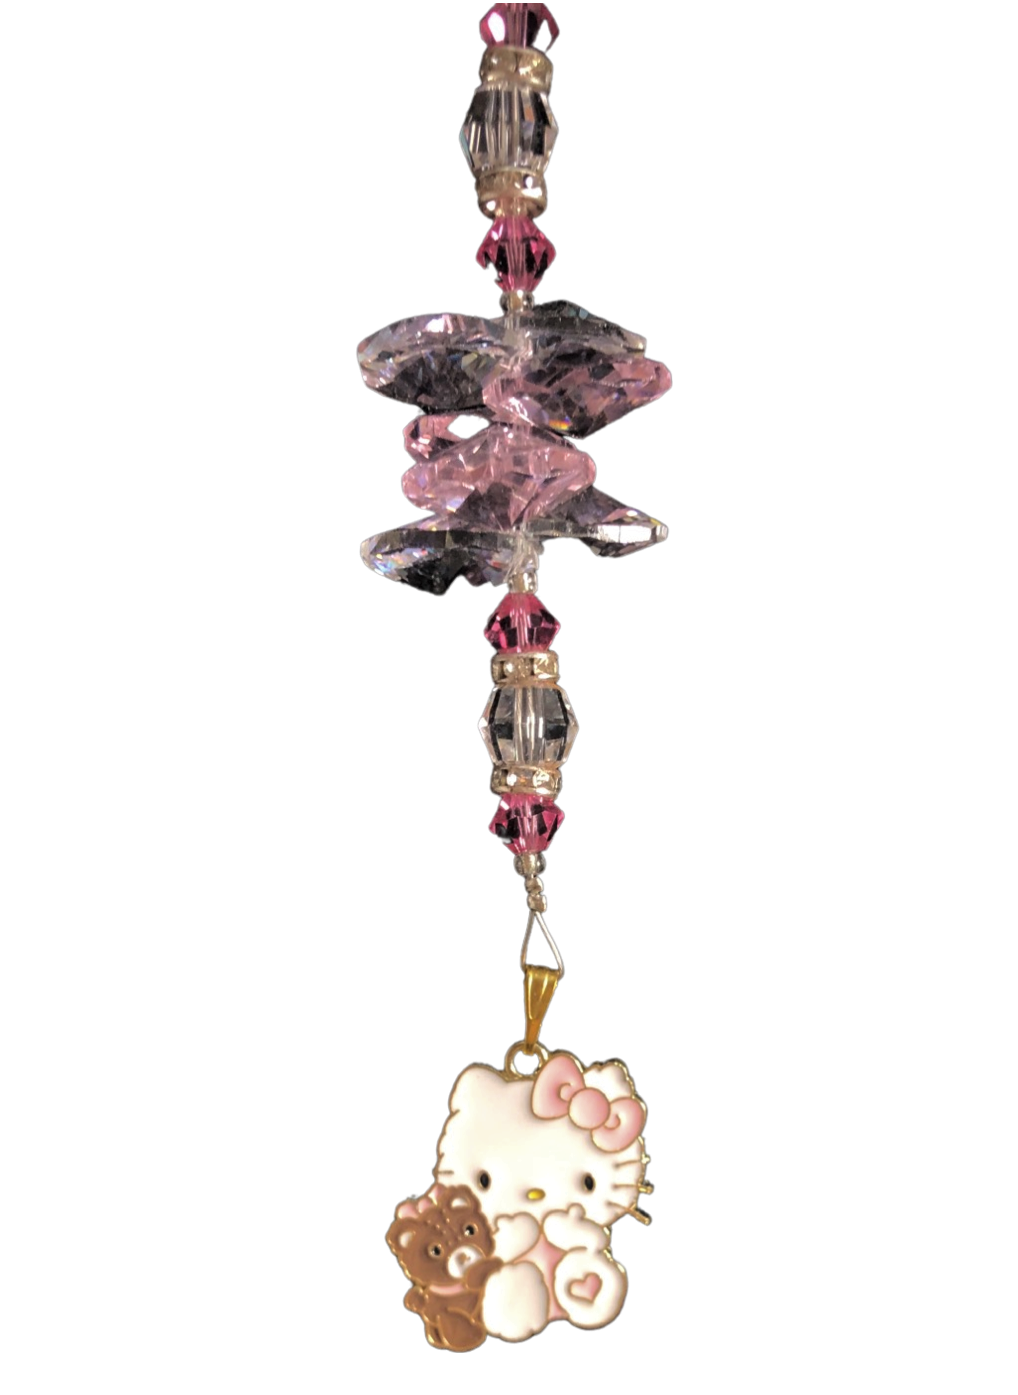 Hello Kitty - suncatcher, decorated with rose quartz gemstone